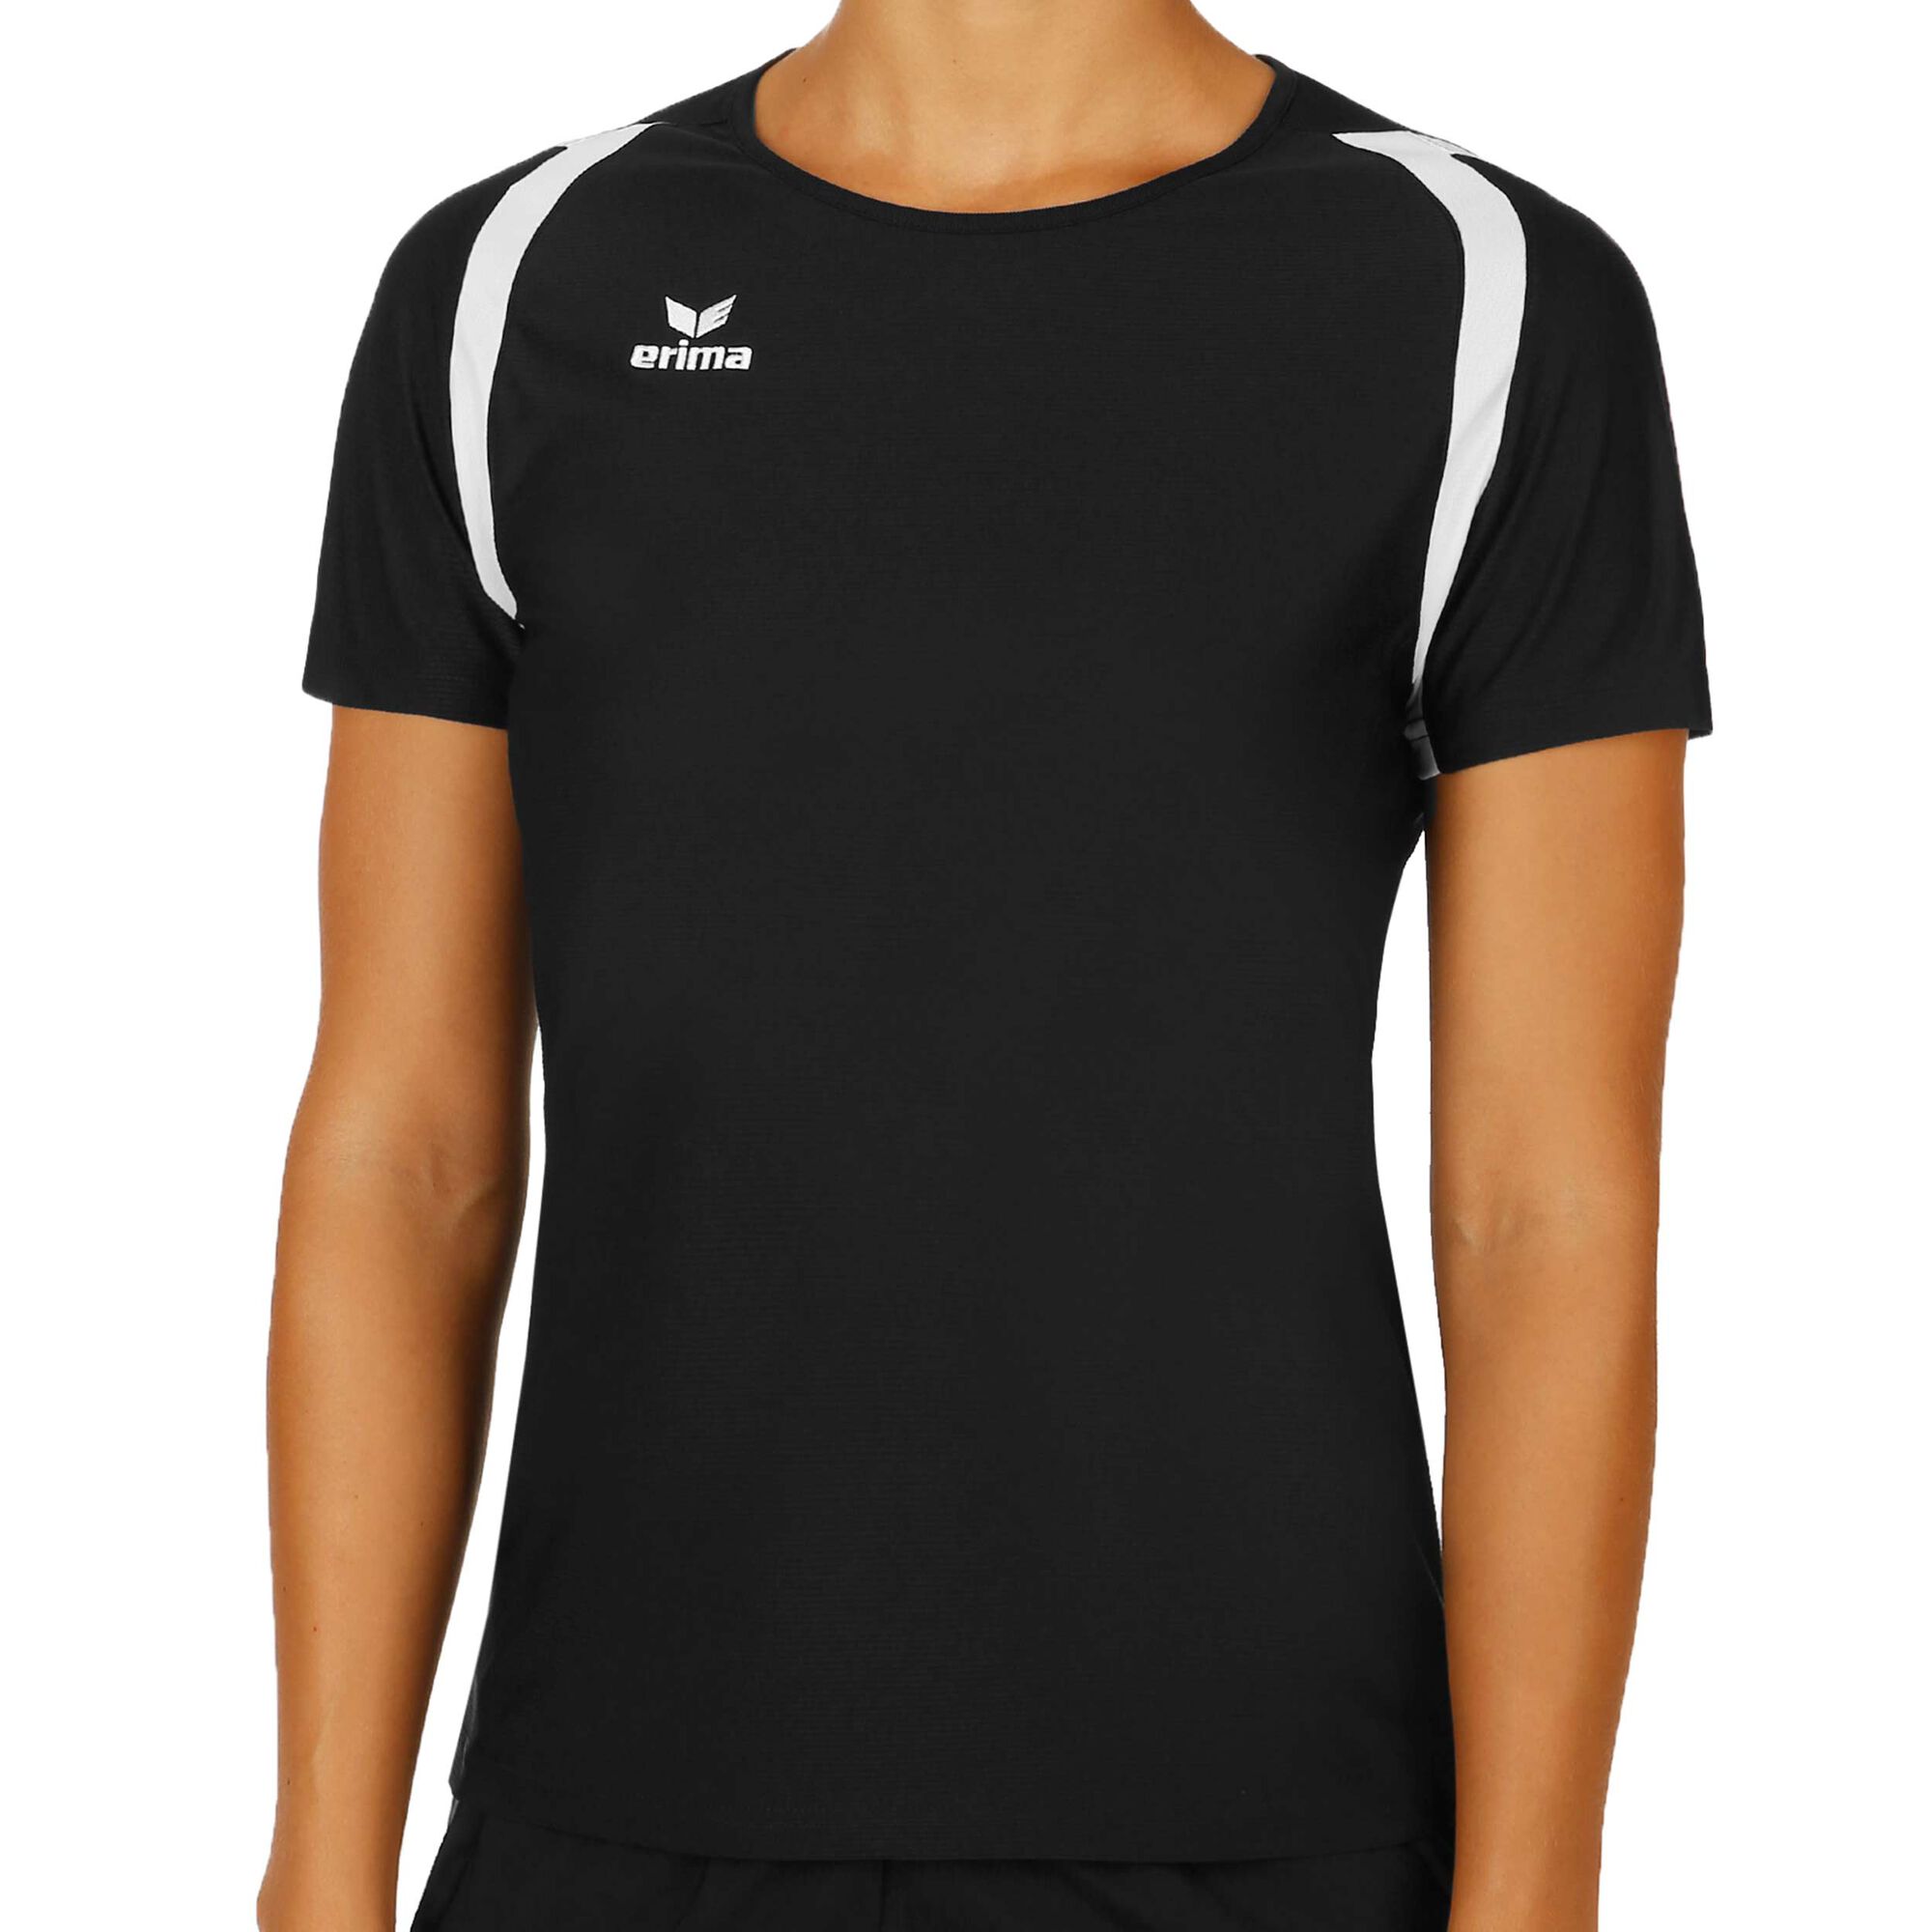 Hilarisch Correct Boekhouder buy Erima Razor 2.0 T-Shirt Women - Black, White online | Tennis-Point